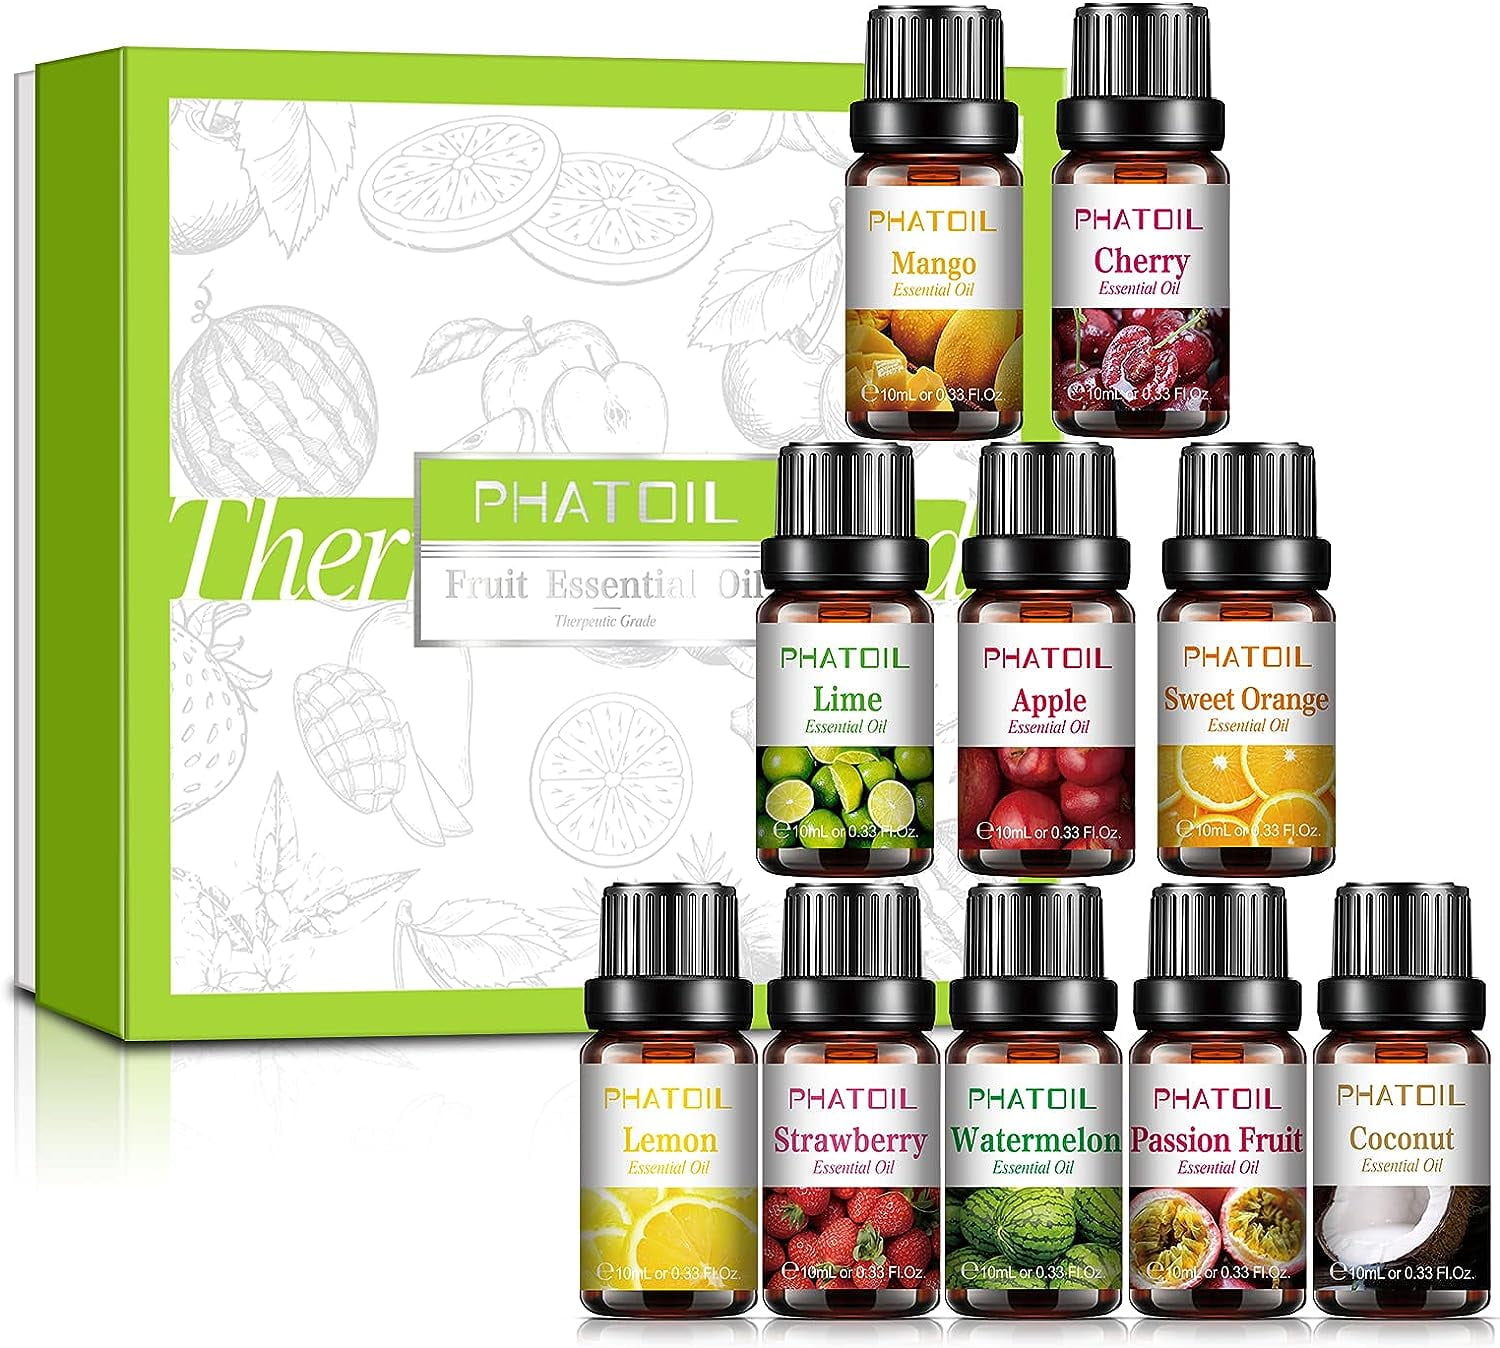 PHATOIL 100ML Coconut & Vanilla Essential Oils for Aromatherapy